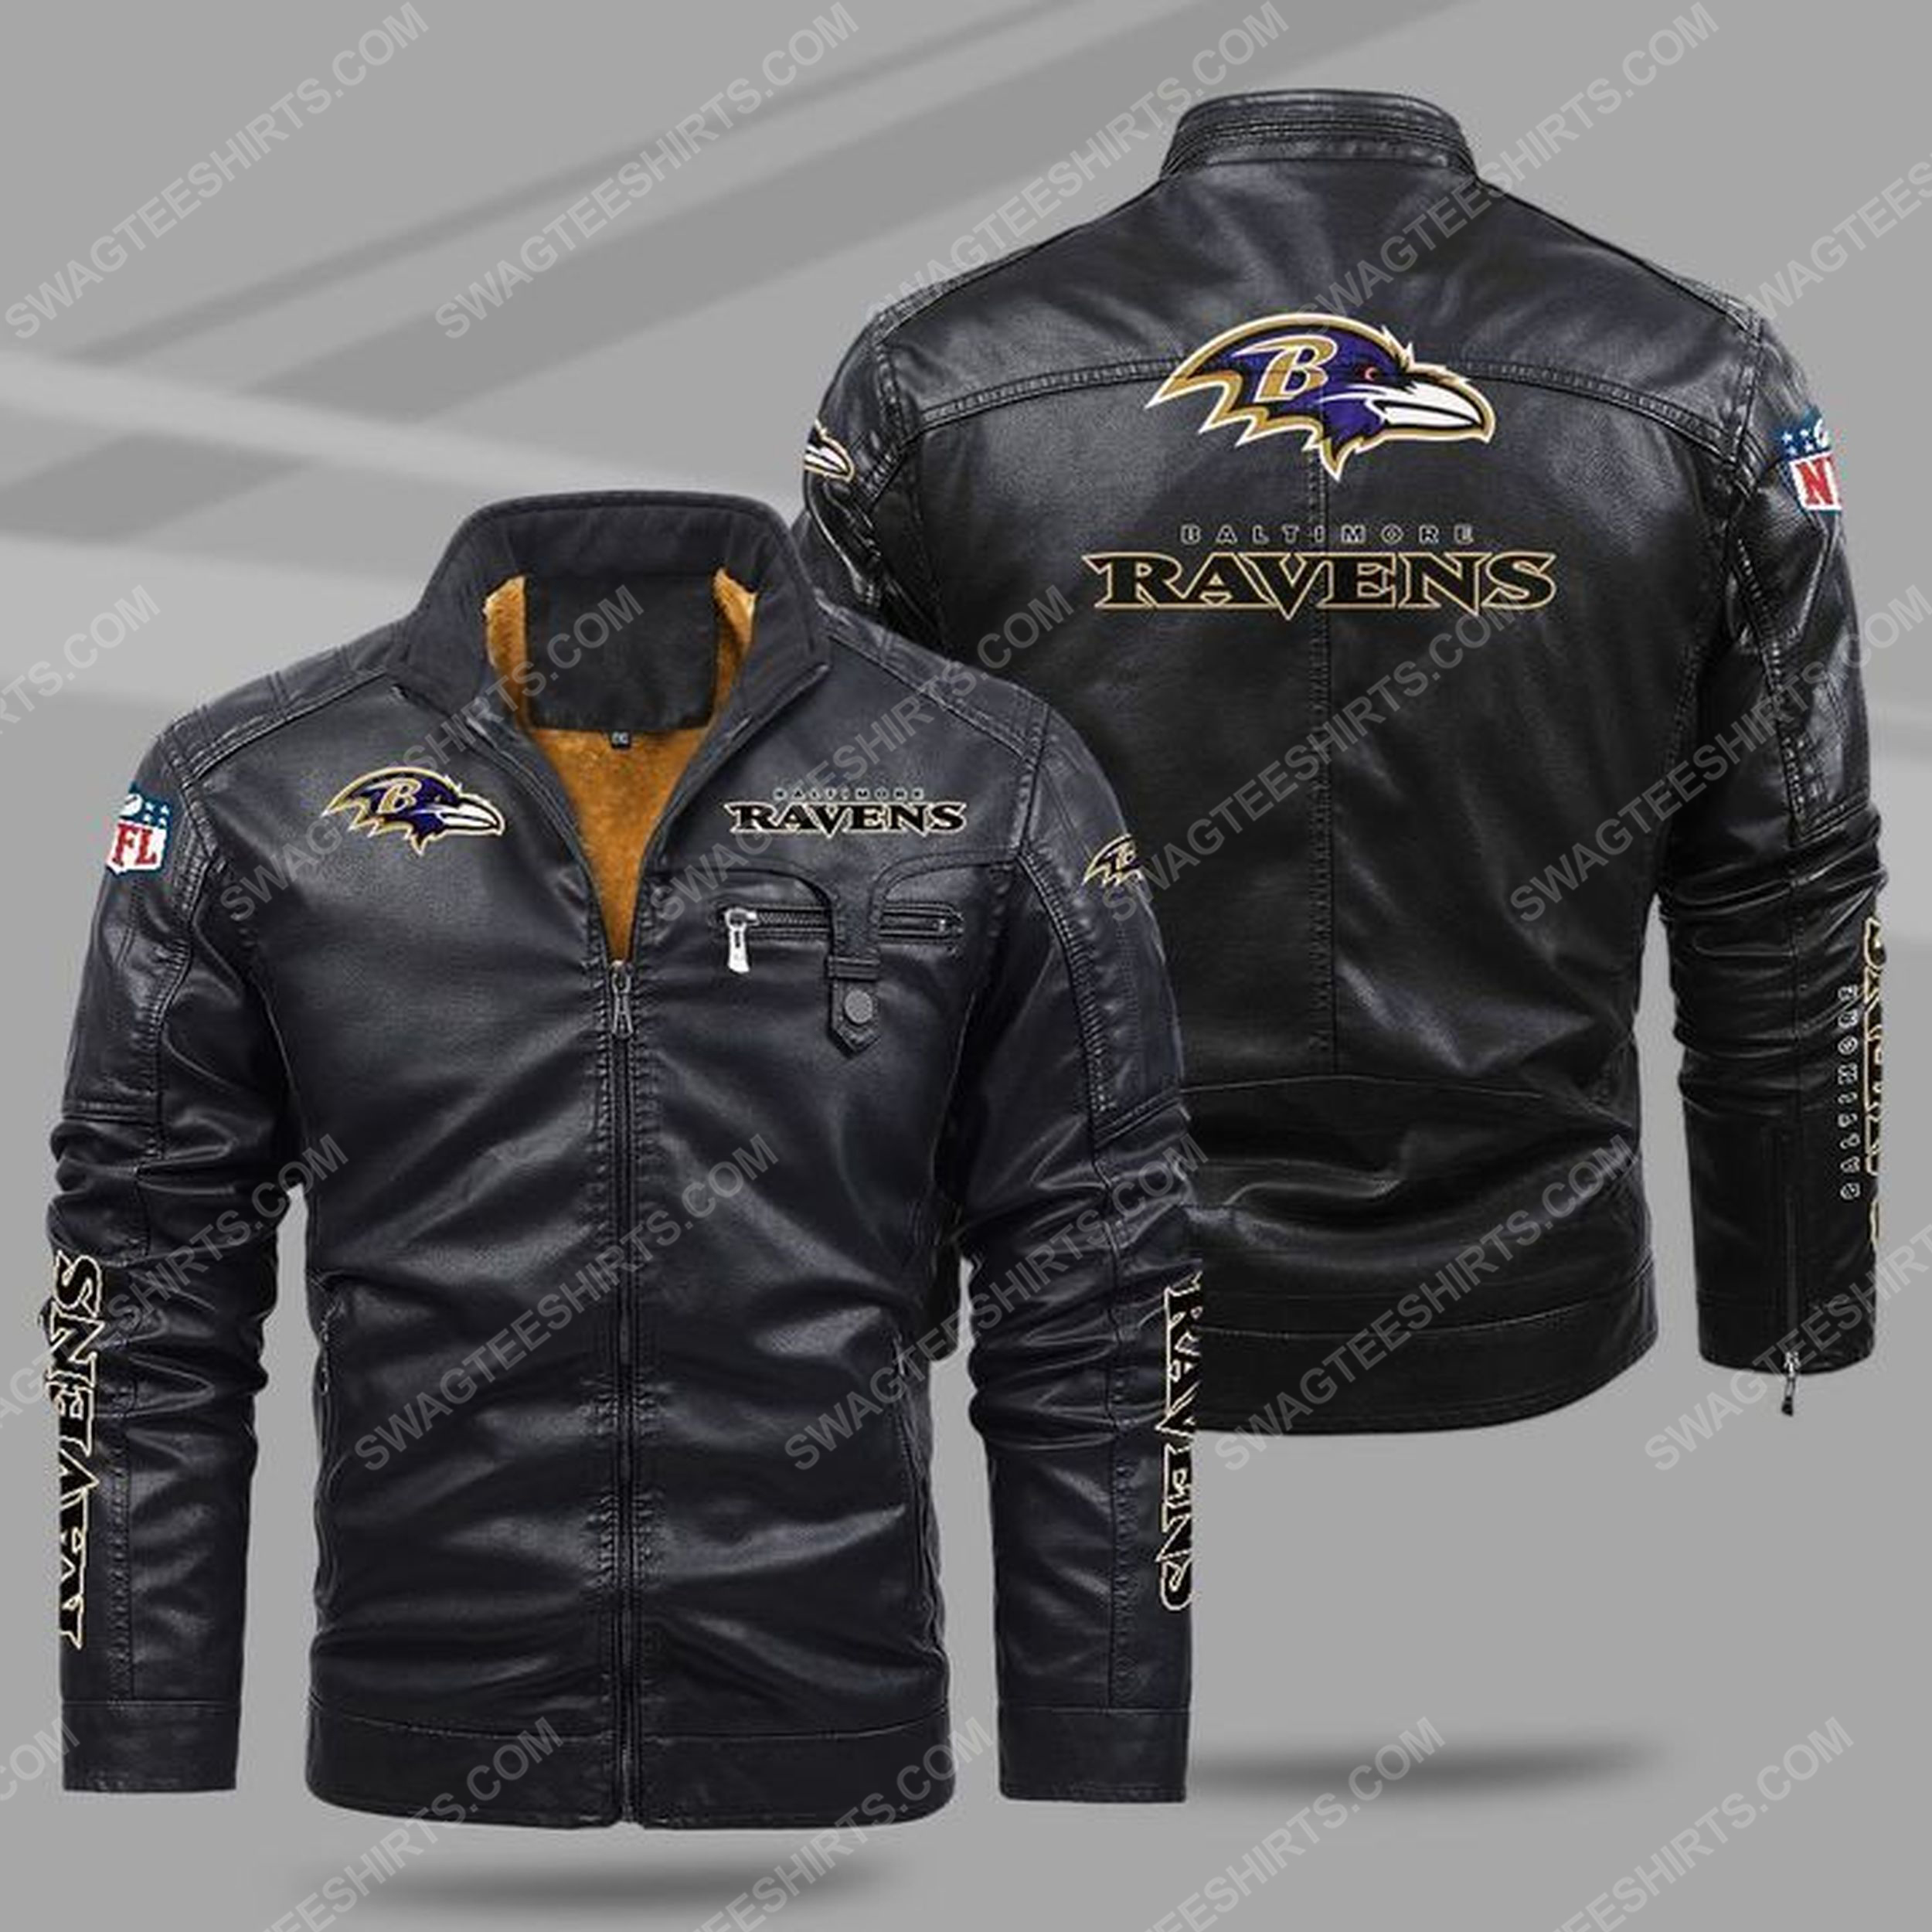 The baltimore ravens nfl all over print fleece leather jacket - black 1 - Copy